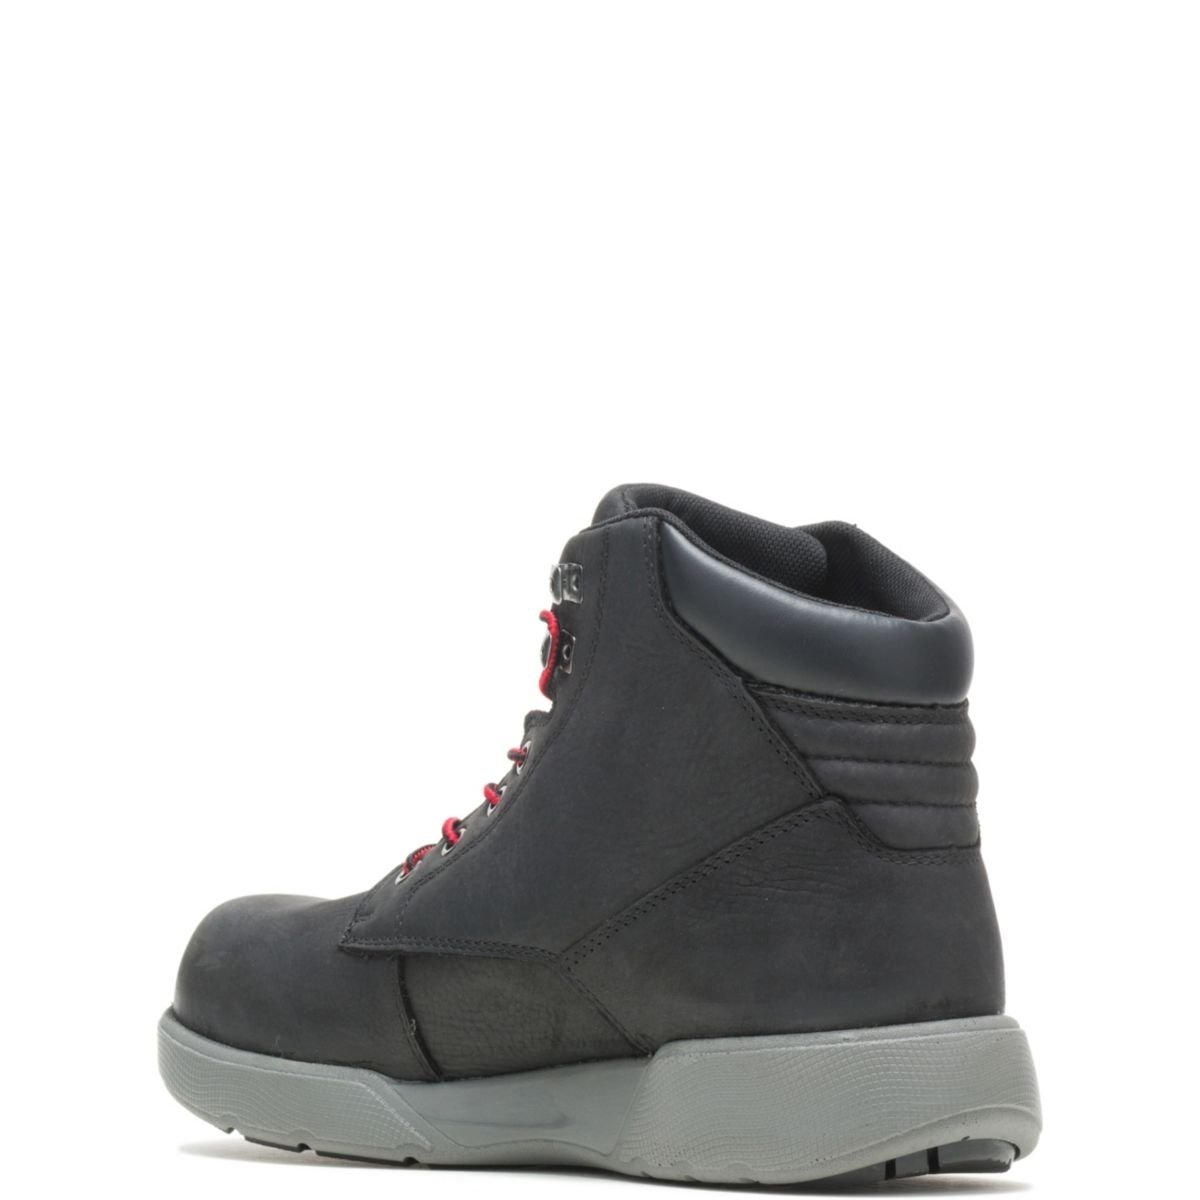 WOLVERINE Men's Kickstart 6 DuraShocksÂ® CarbonMAXÂ® Composite Toe Work Boot Black - W211116 BLACK - BLACK, 12